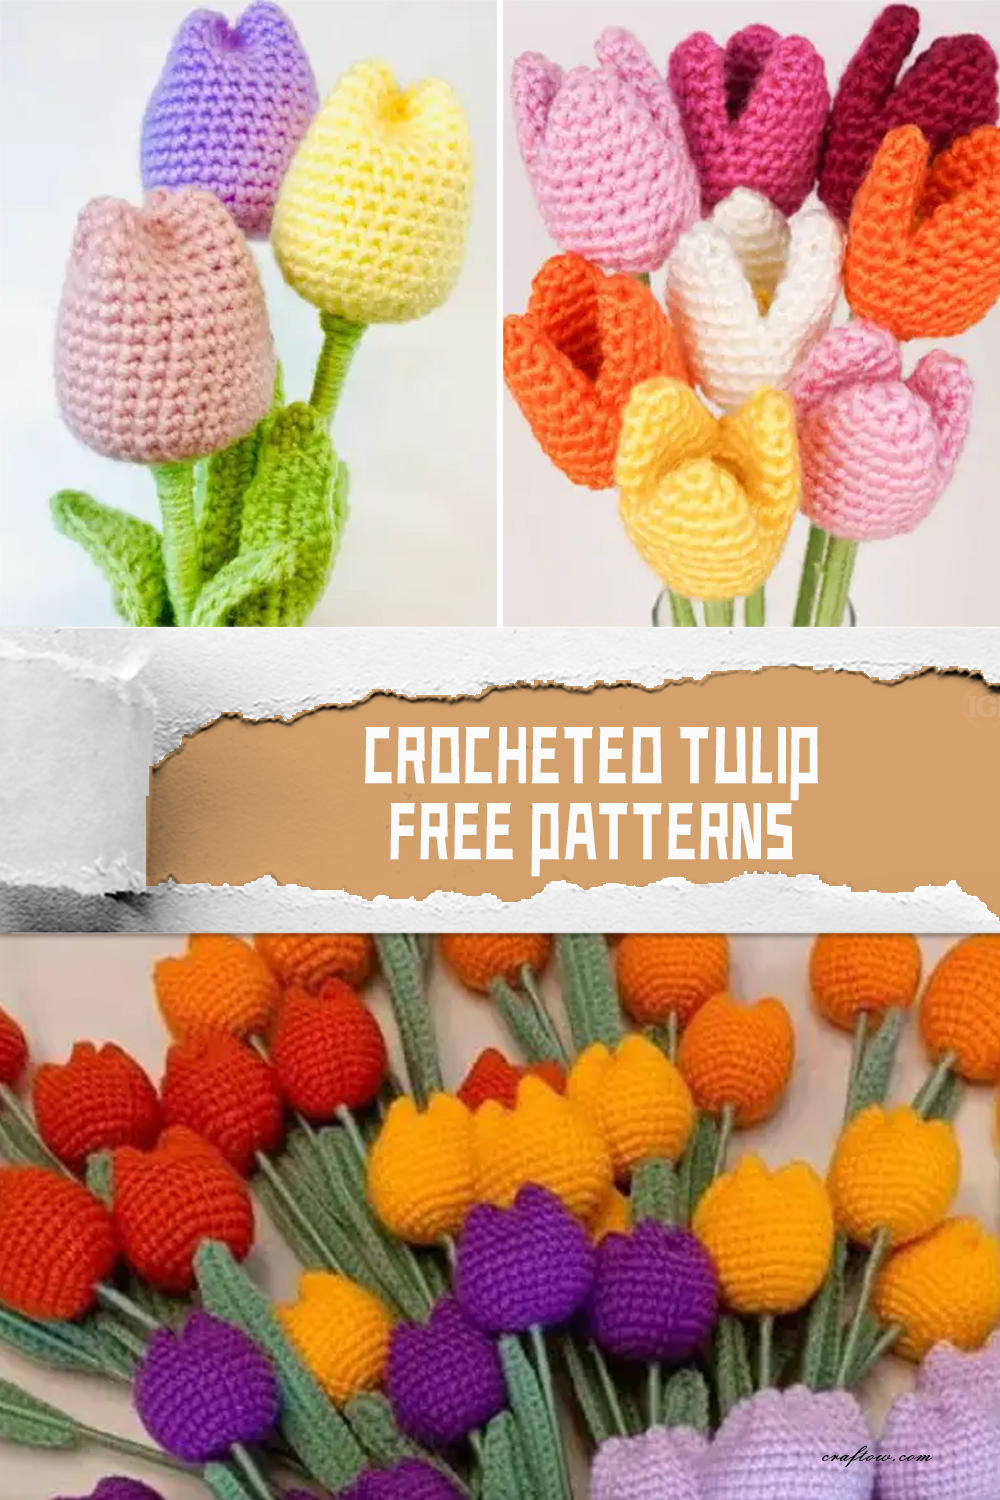 Crocheted Tulip FREE PATTERNS